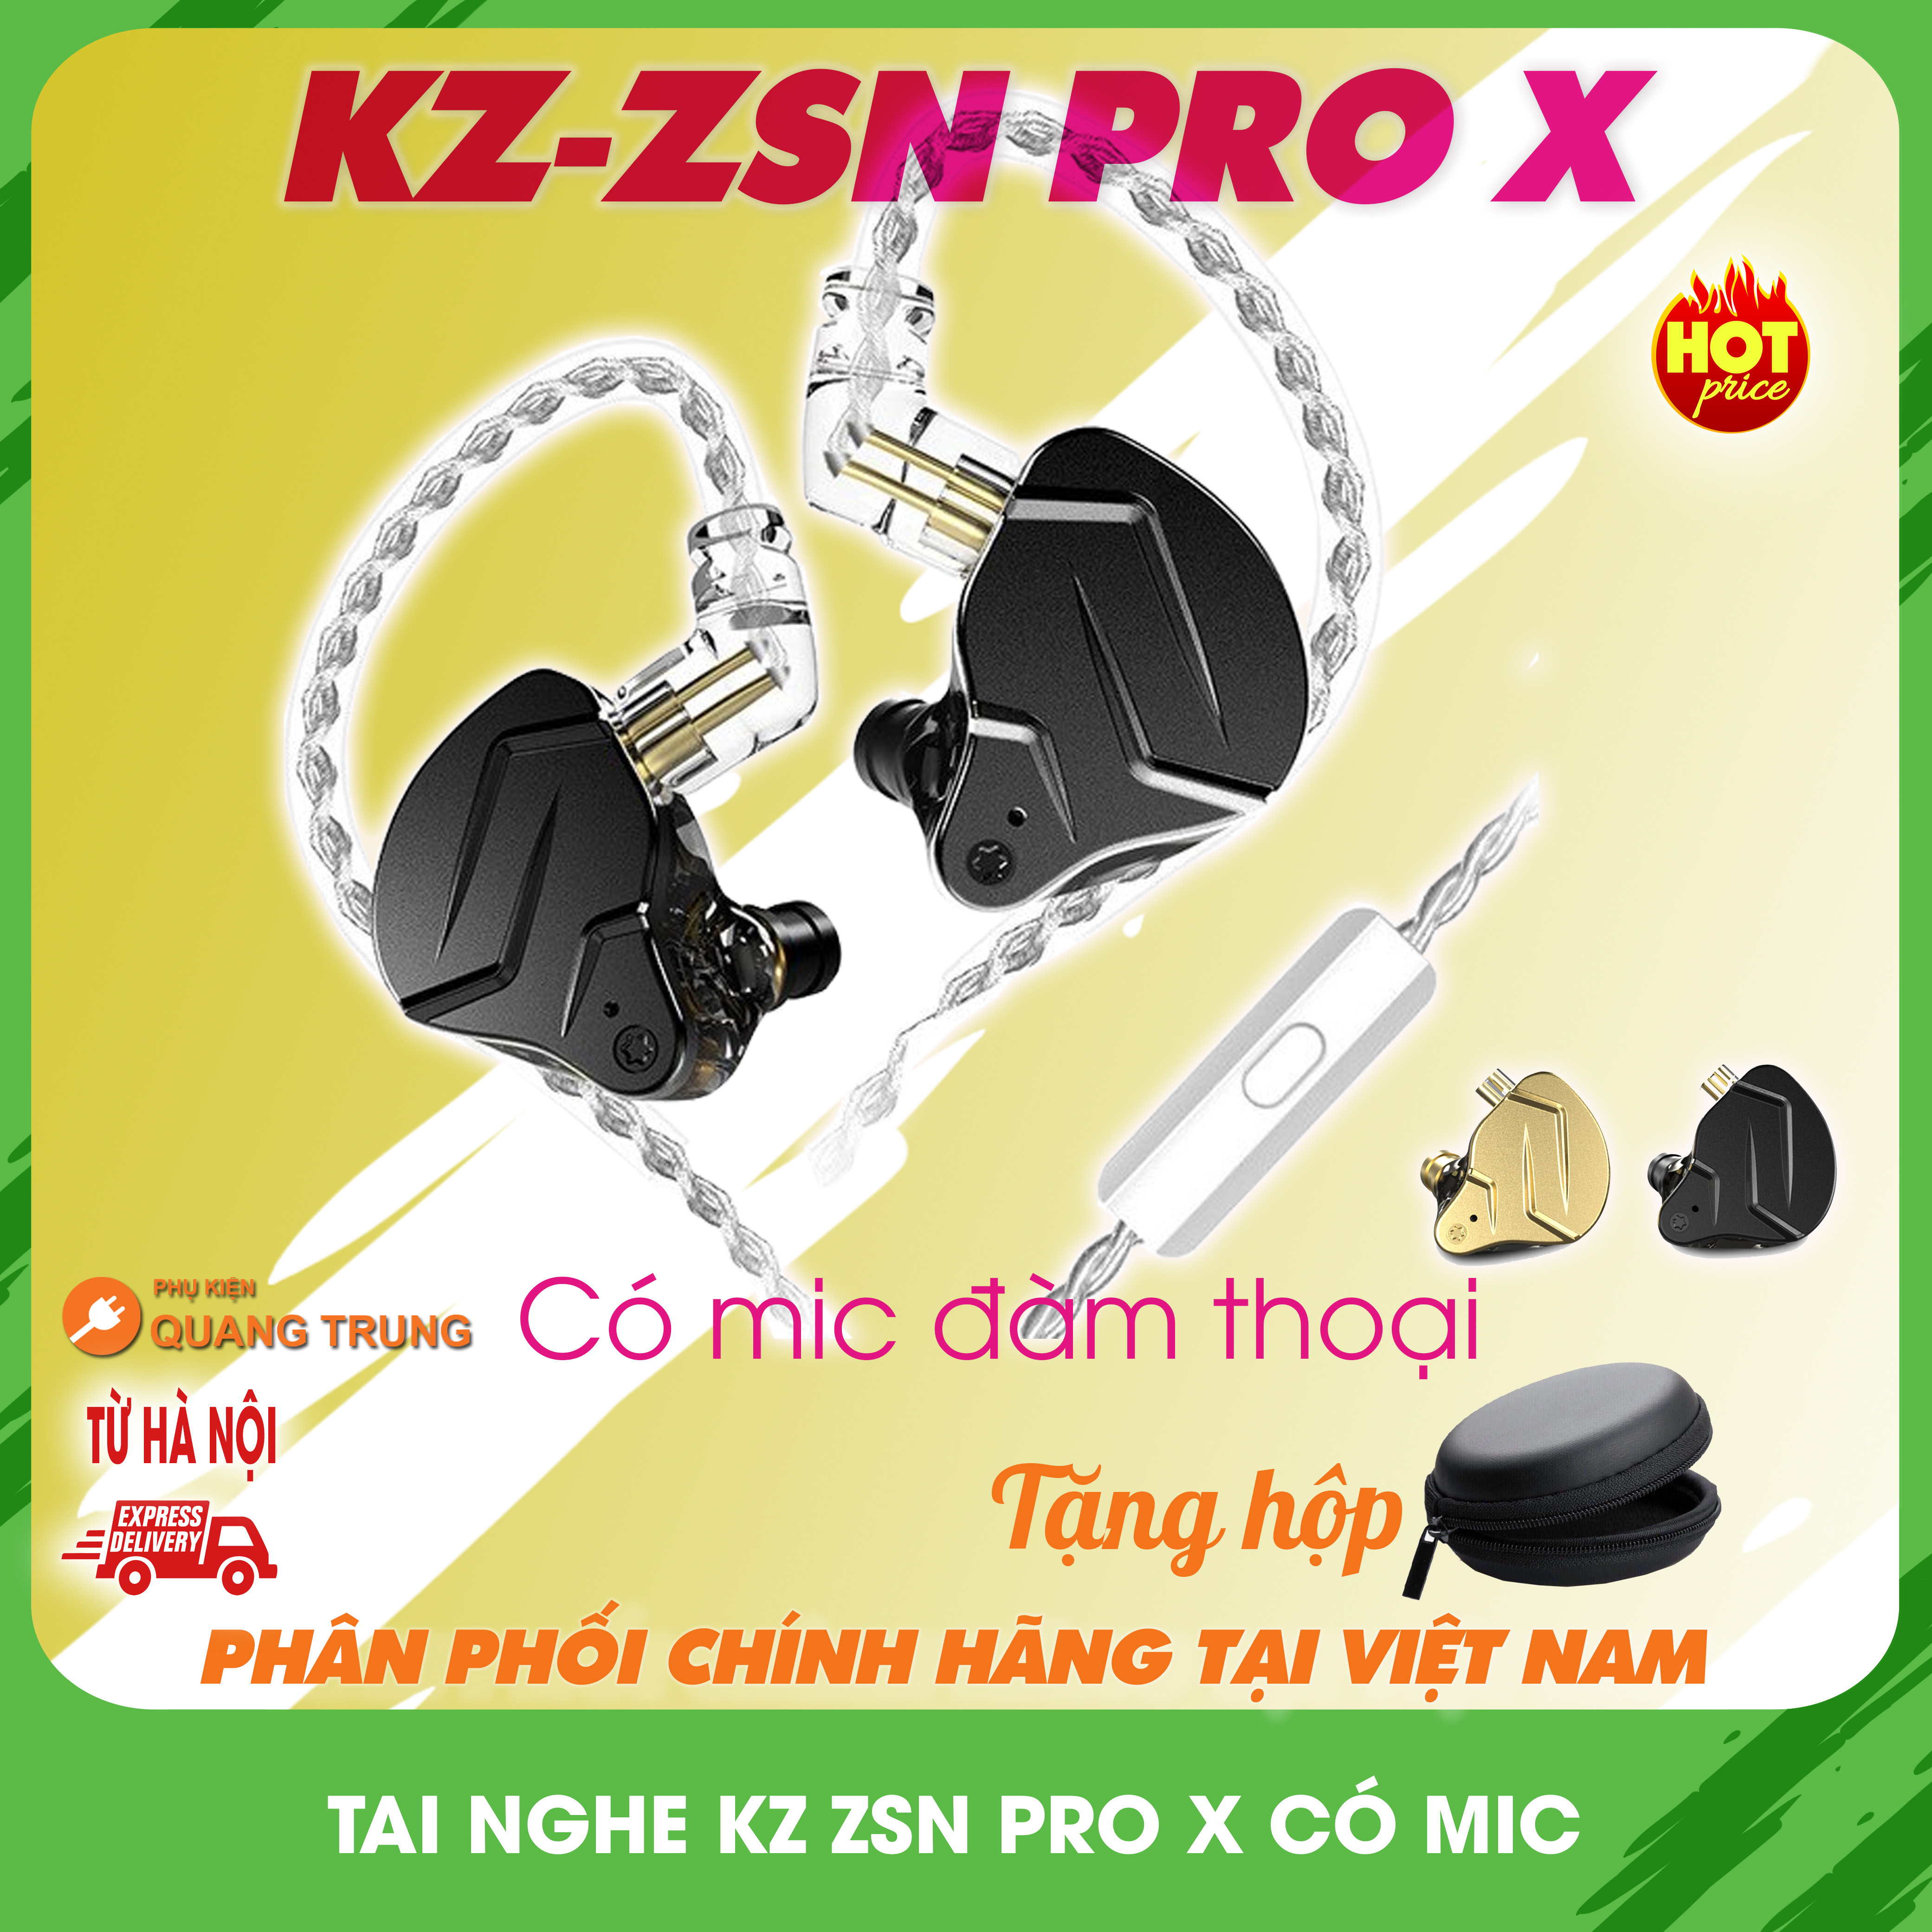 Earphone KZ zsn Prox have MIC two way radio thoạibản upgrading worthwhile